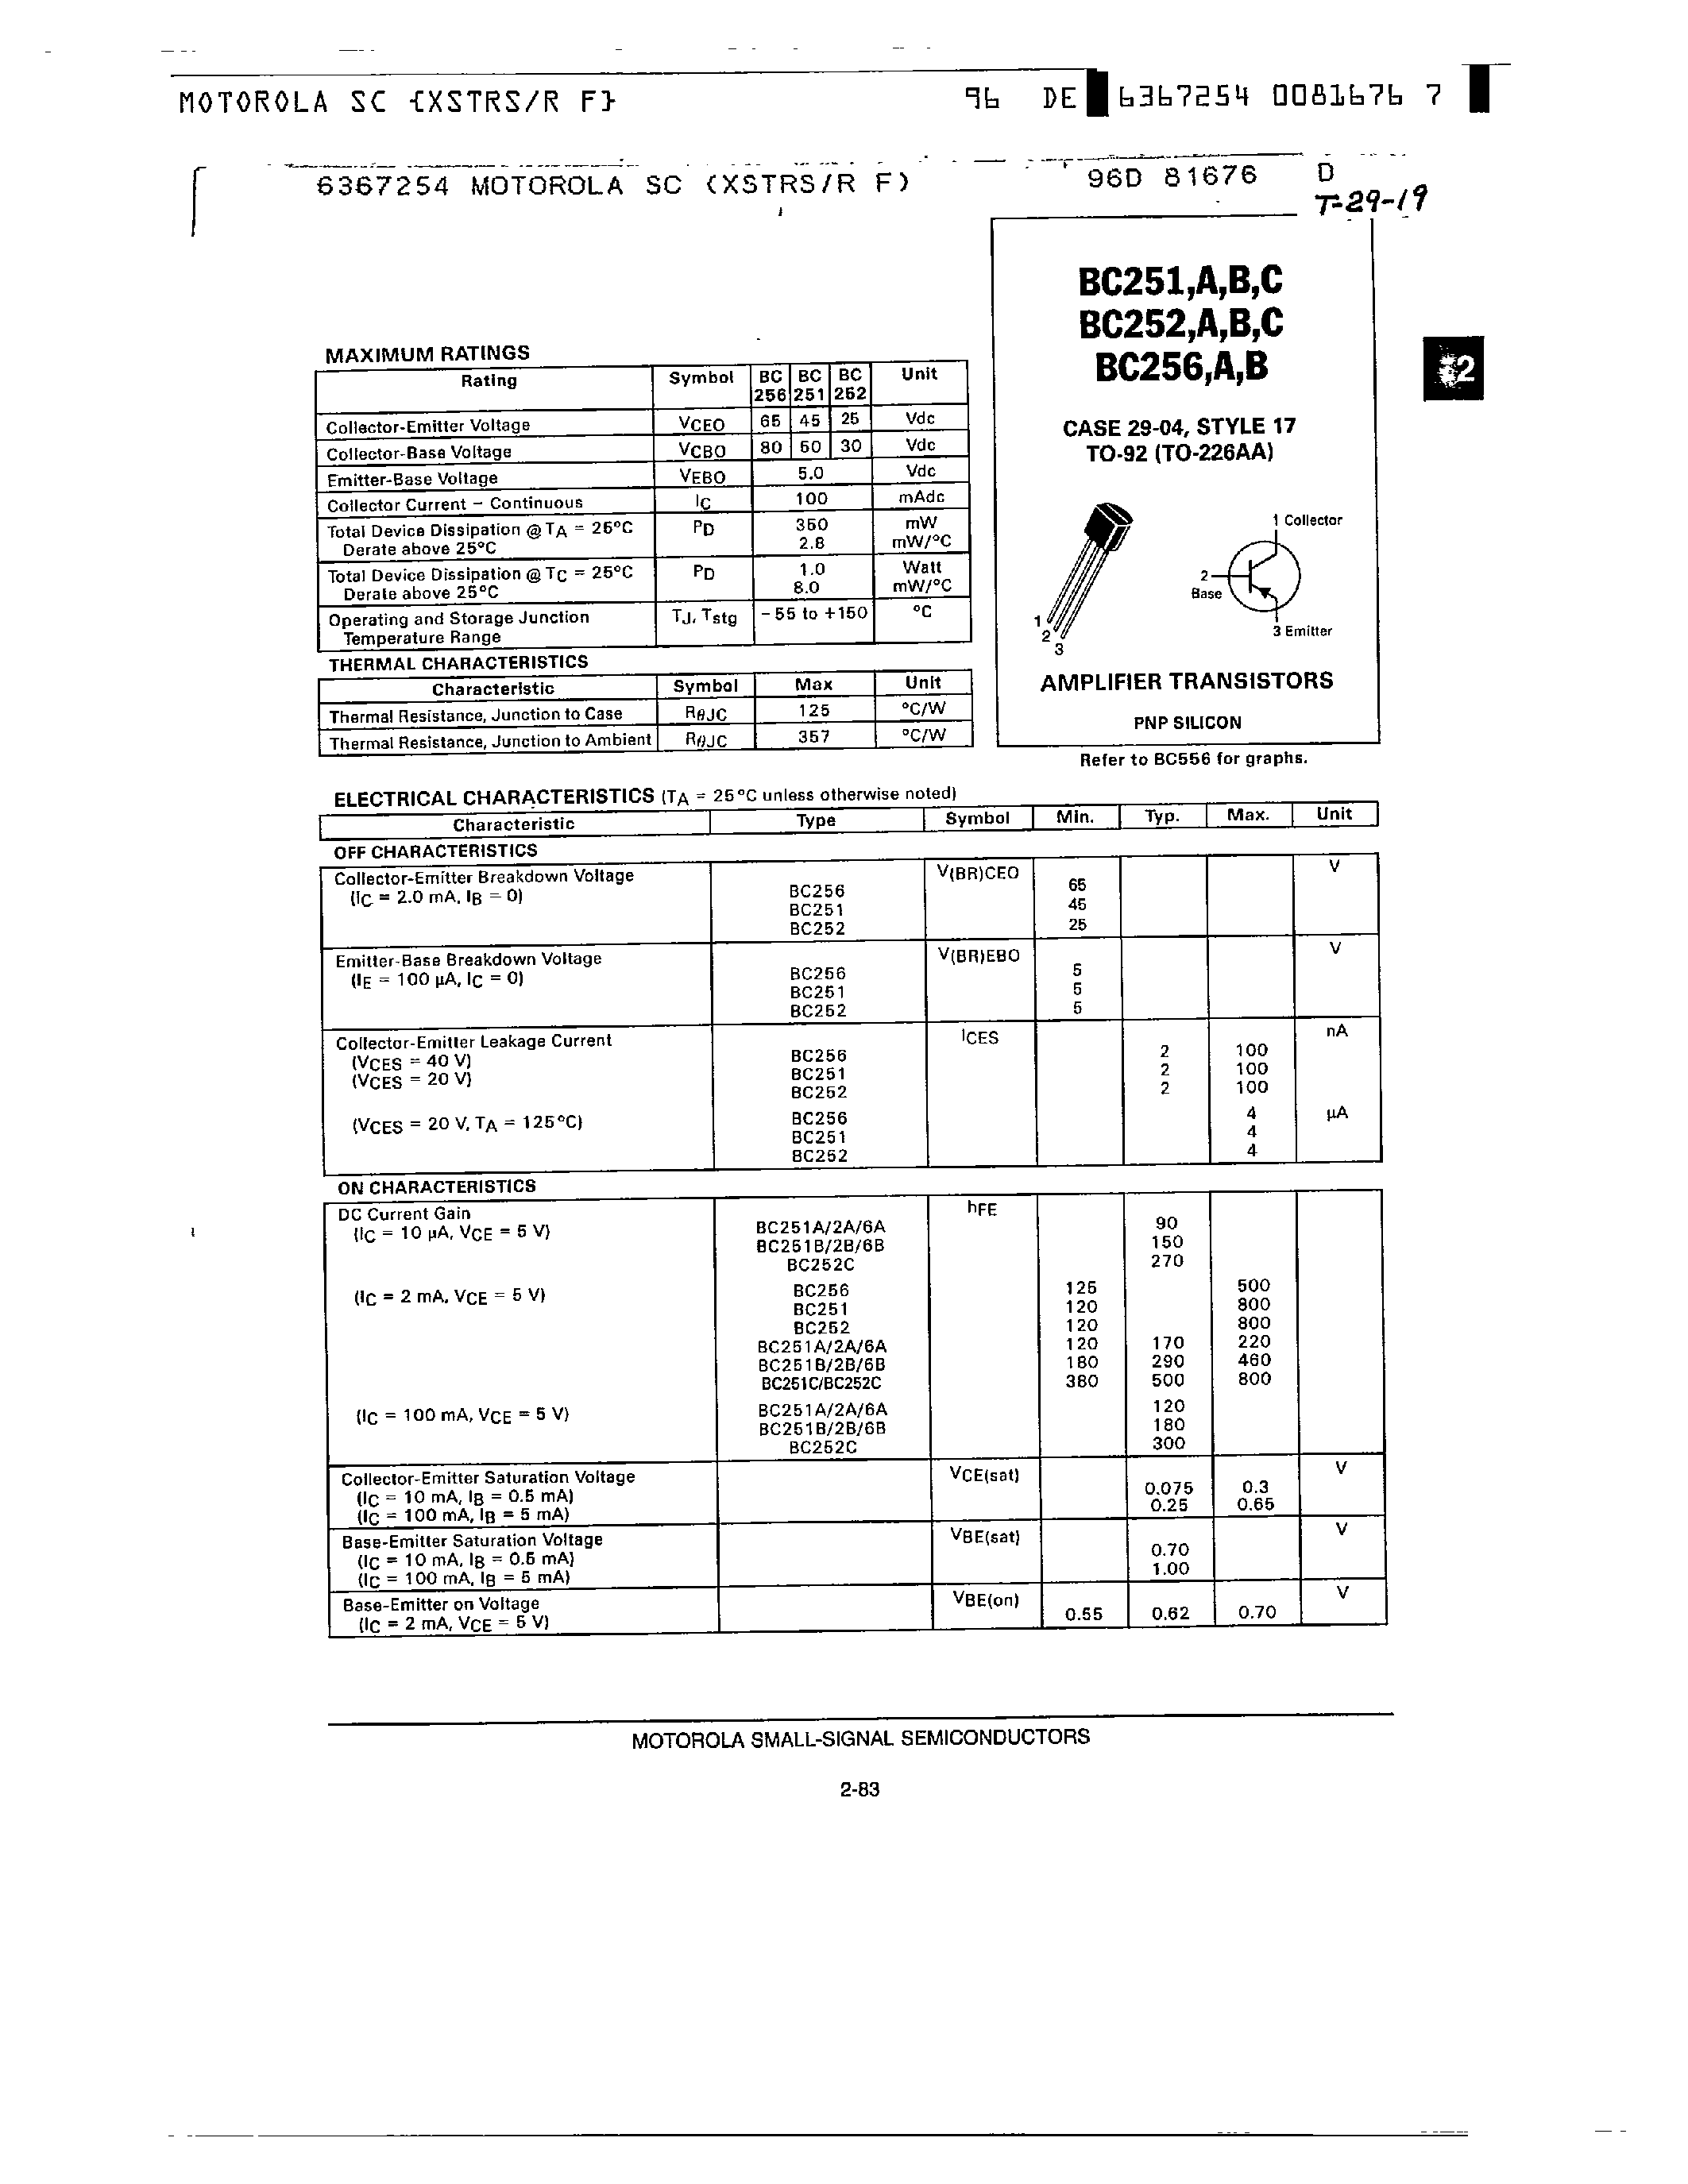 Datasheet BC252B - AMPLIFIER TRANSISTORS PNP SILICON page 1